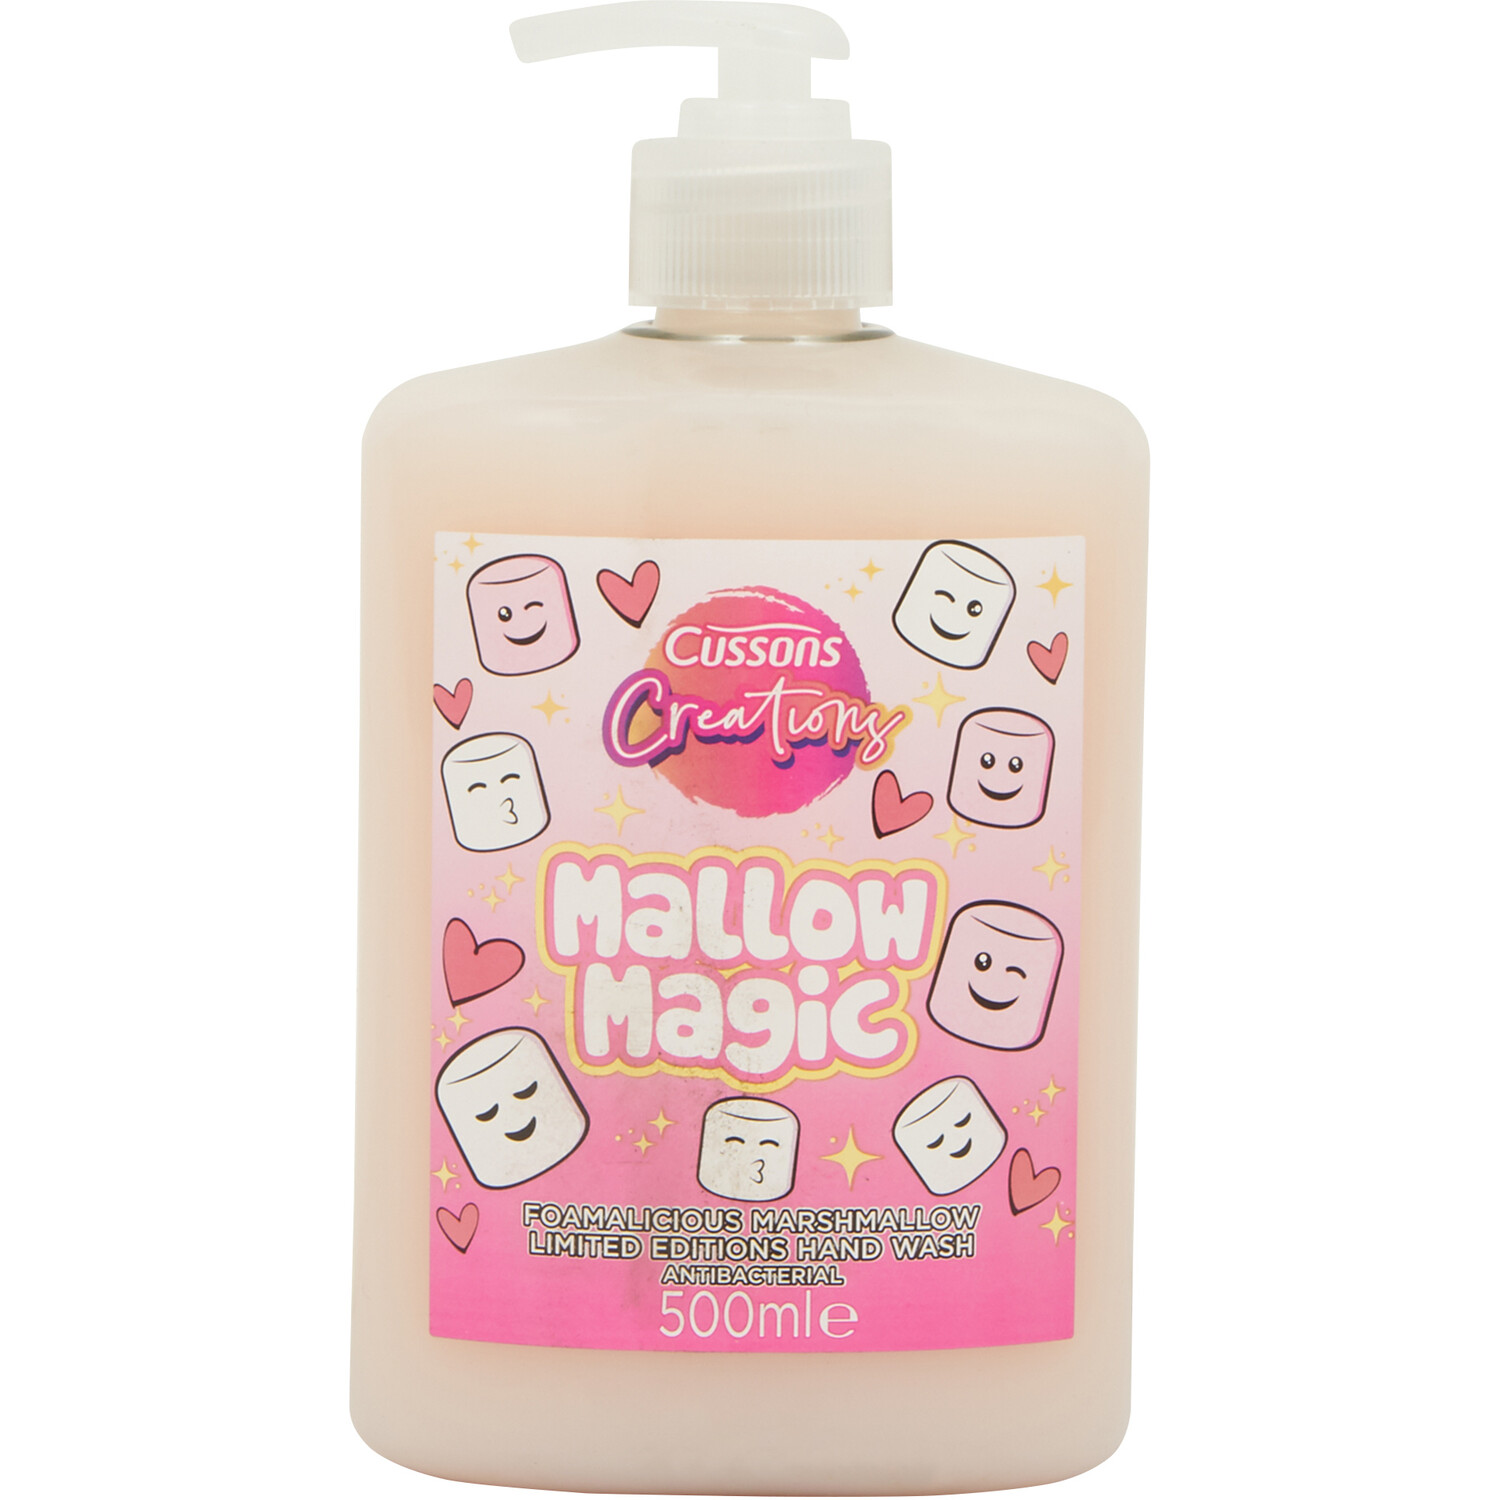 Creations Mallow Magic Hand Wash 500ml - Pink Image 1